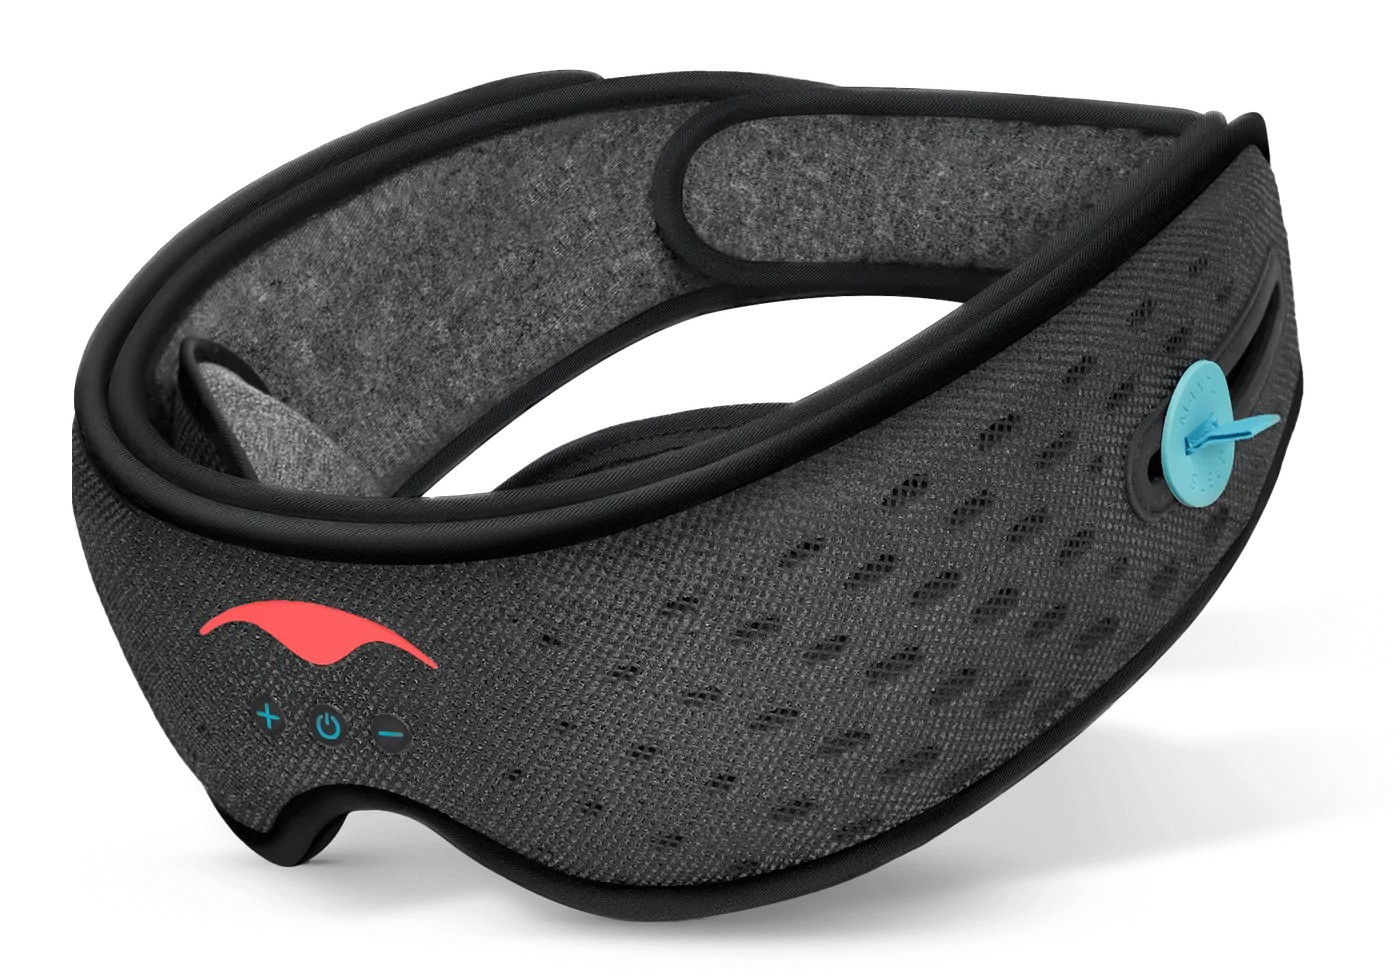 Dark gray sleeping mask with razor-thin earphones and adjustable strap.